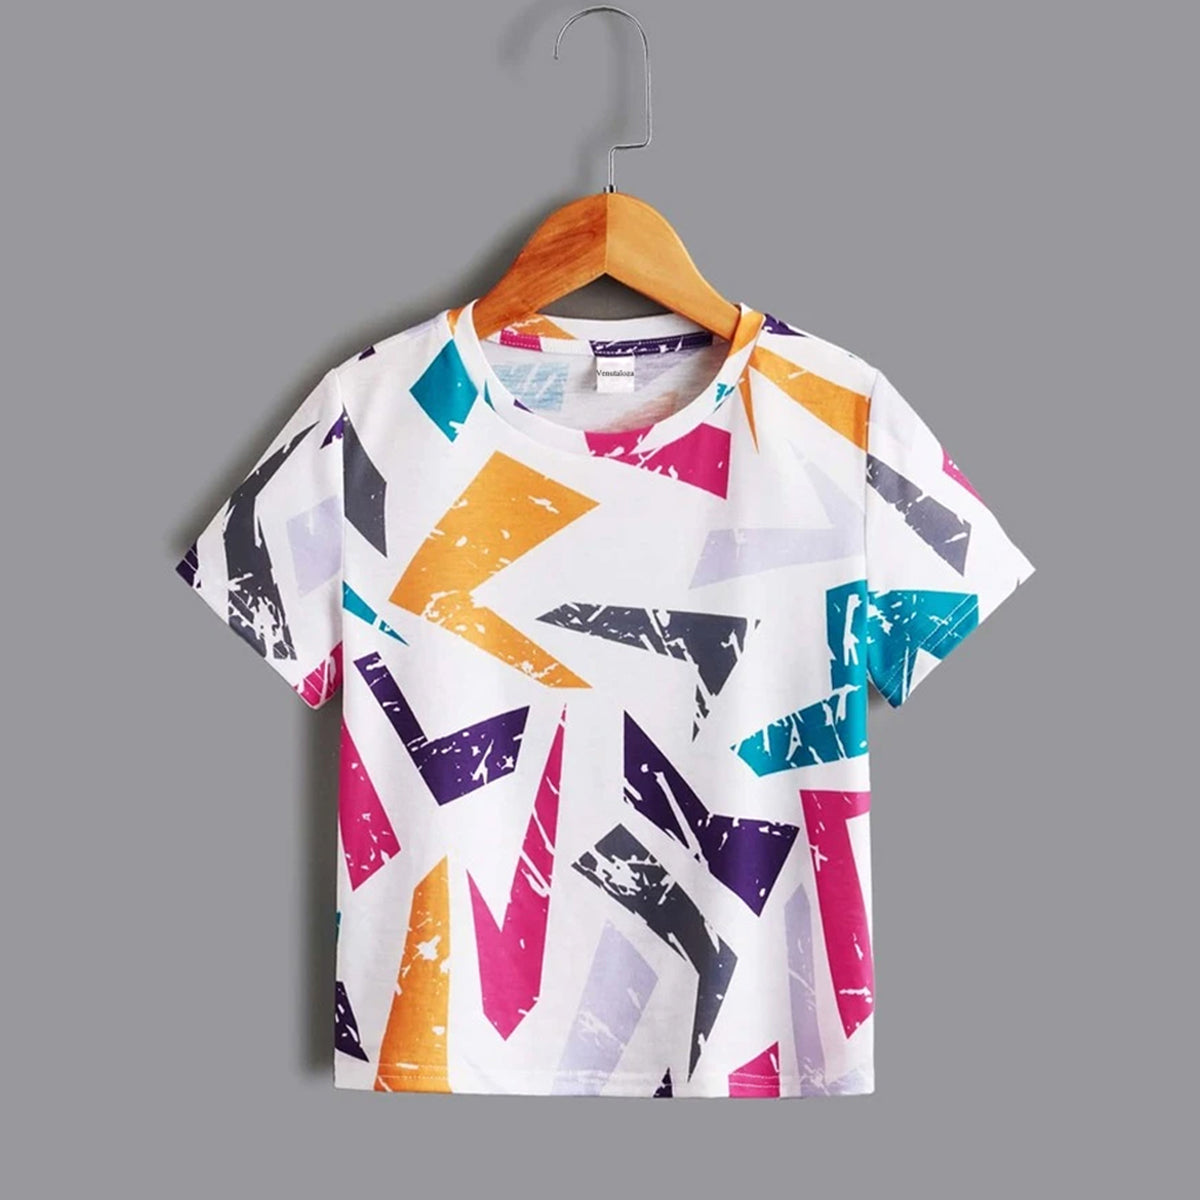 Venutaloza Boy's Allover Graphic Tee T-Shirt For Boy's & Girl's..